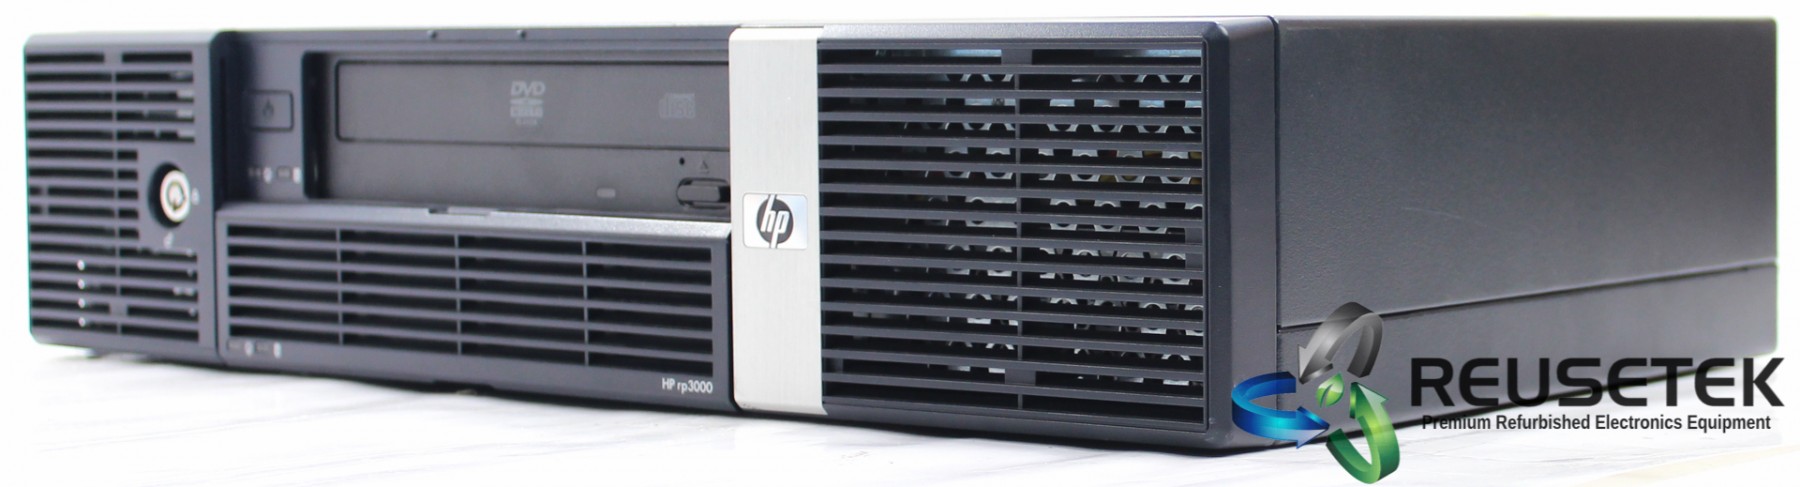 500031394-HP rp3000 POS Desktop PC-image